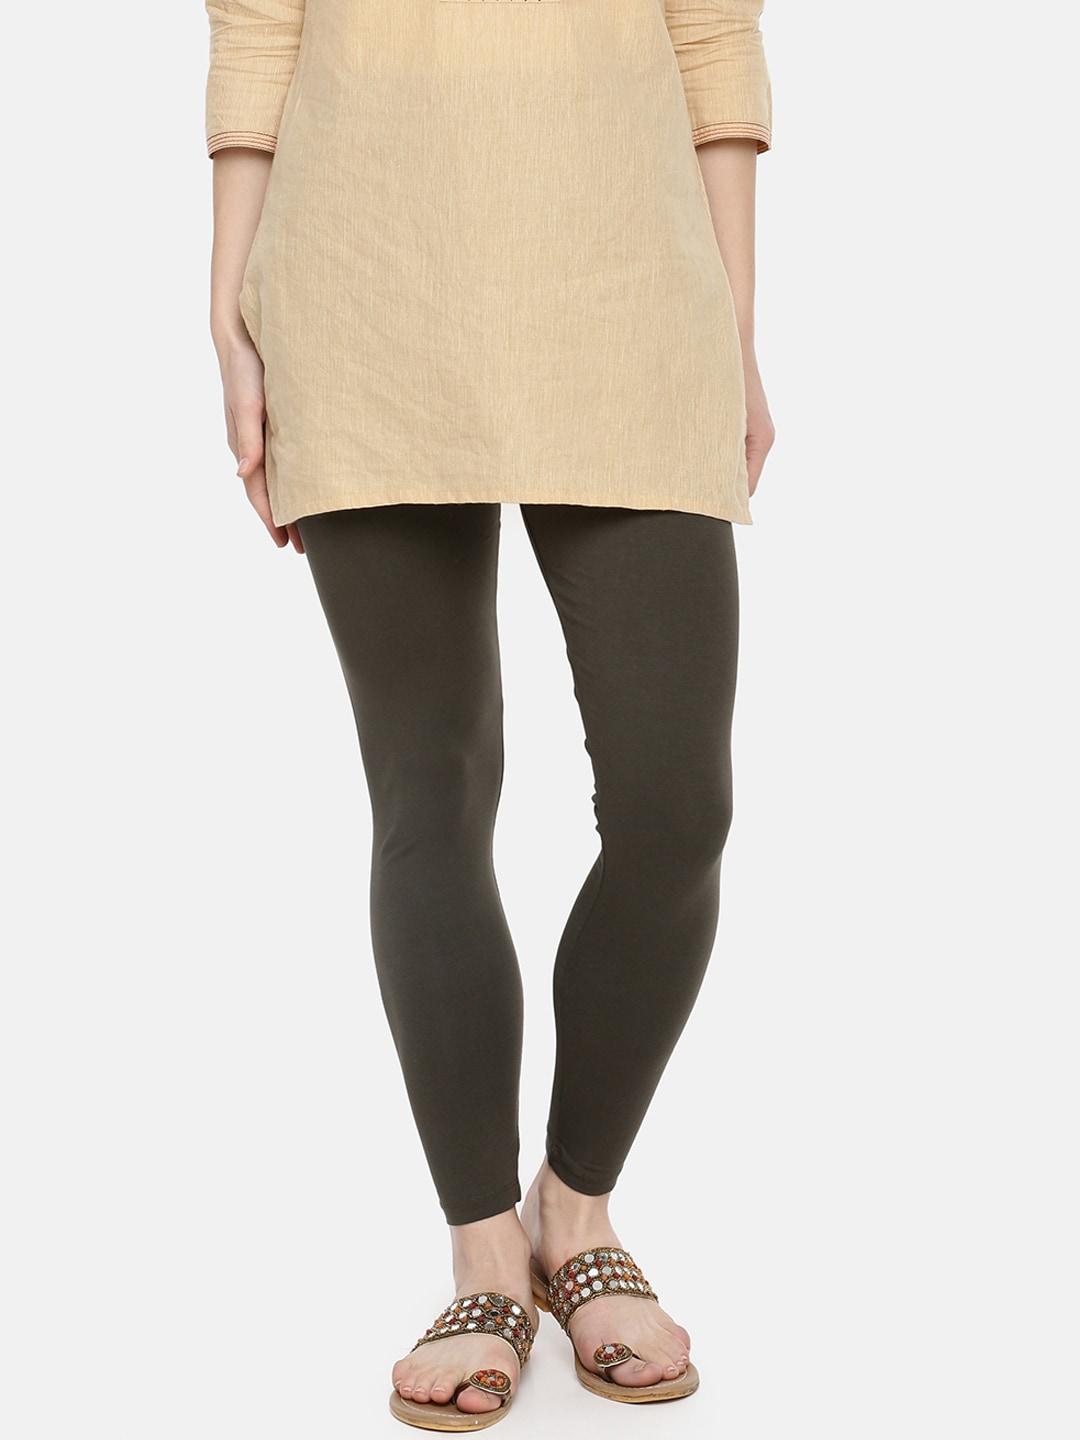 dollar missy women olive brown solid ankle length leggings